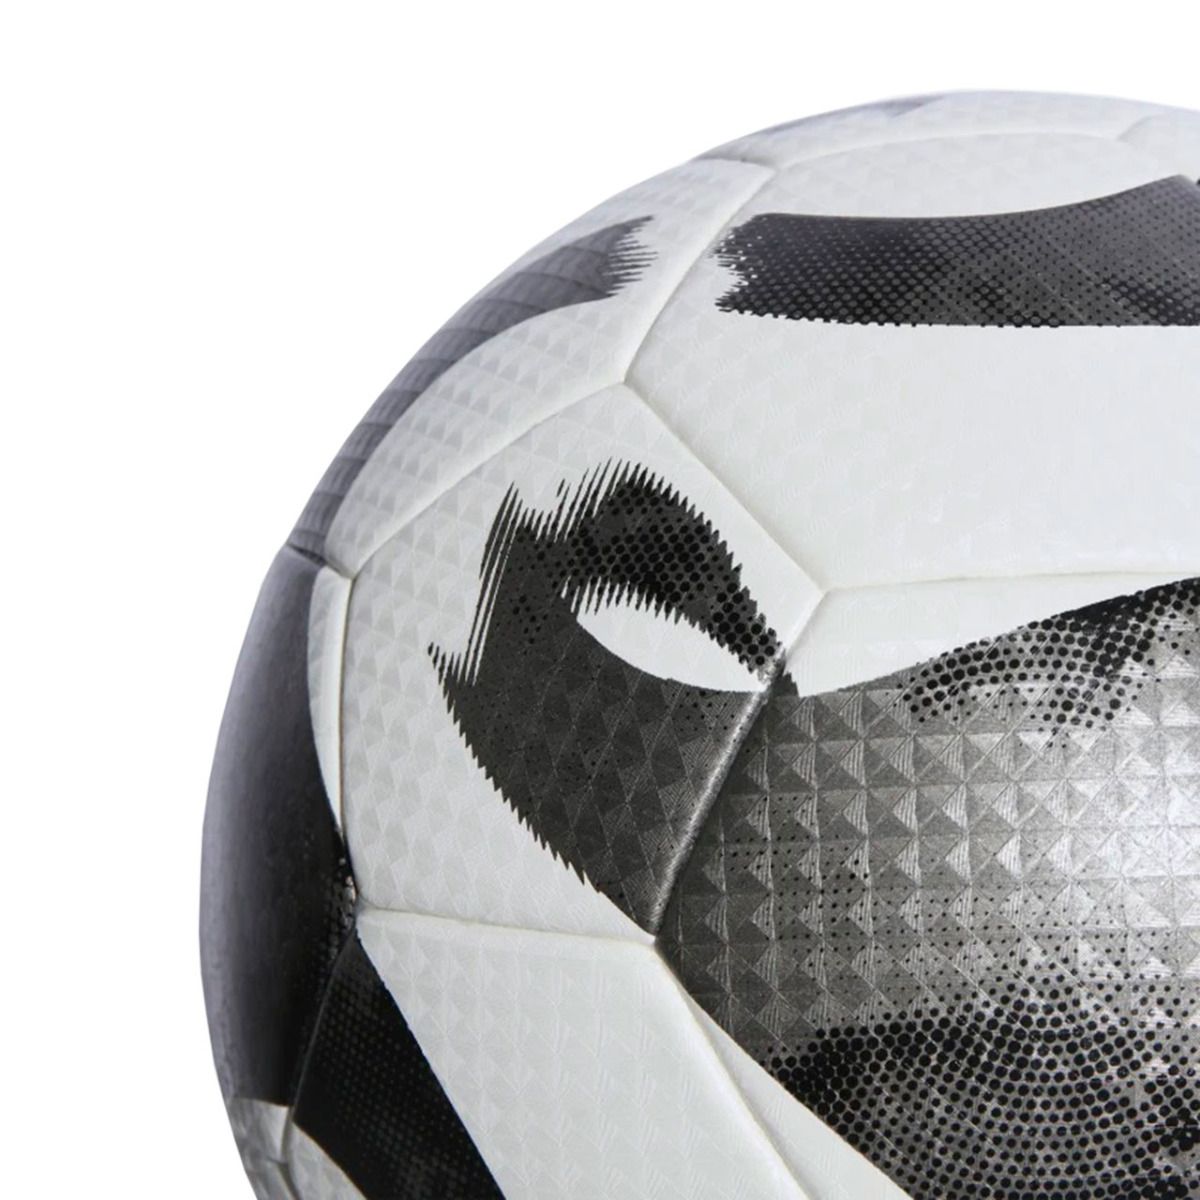 adidas Futbalová lopta Tiro League Artificial Ground HT2423